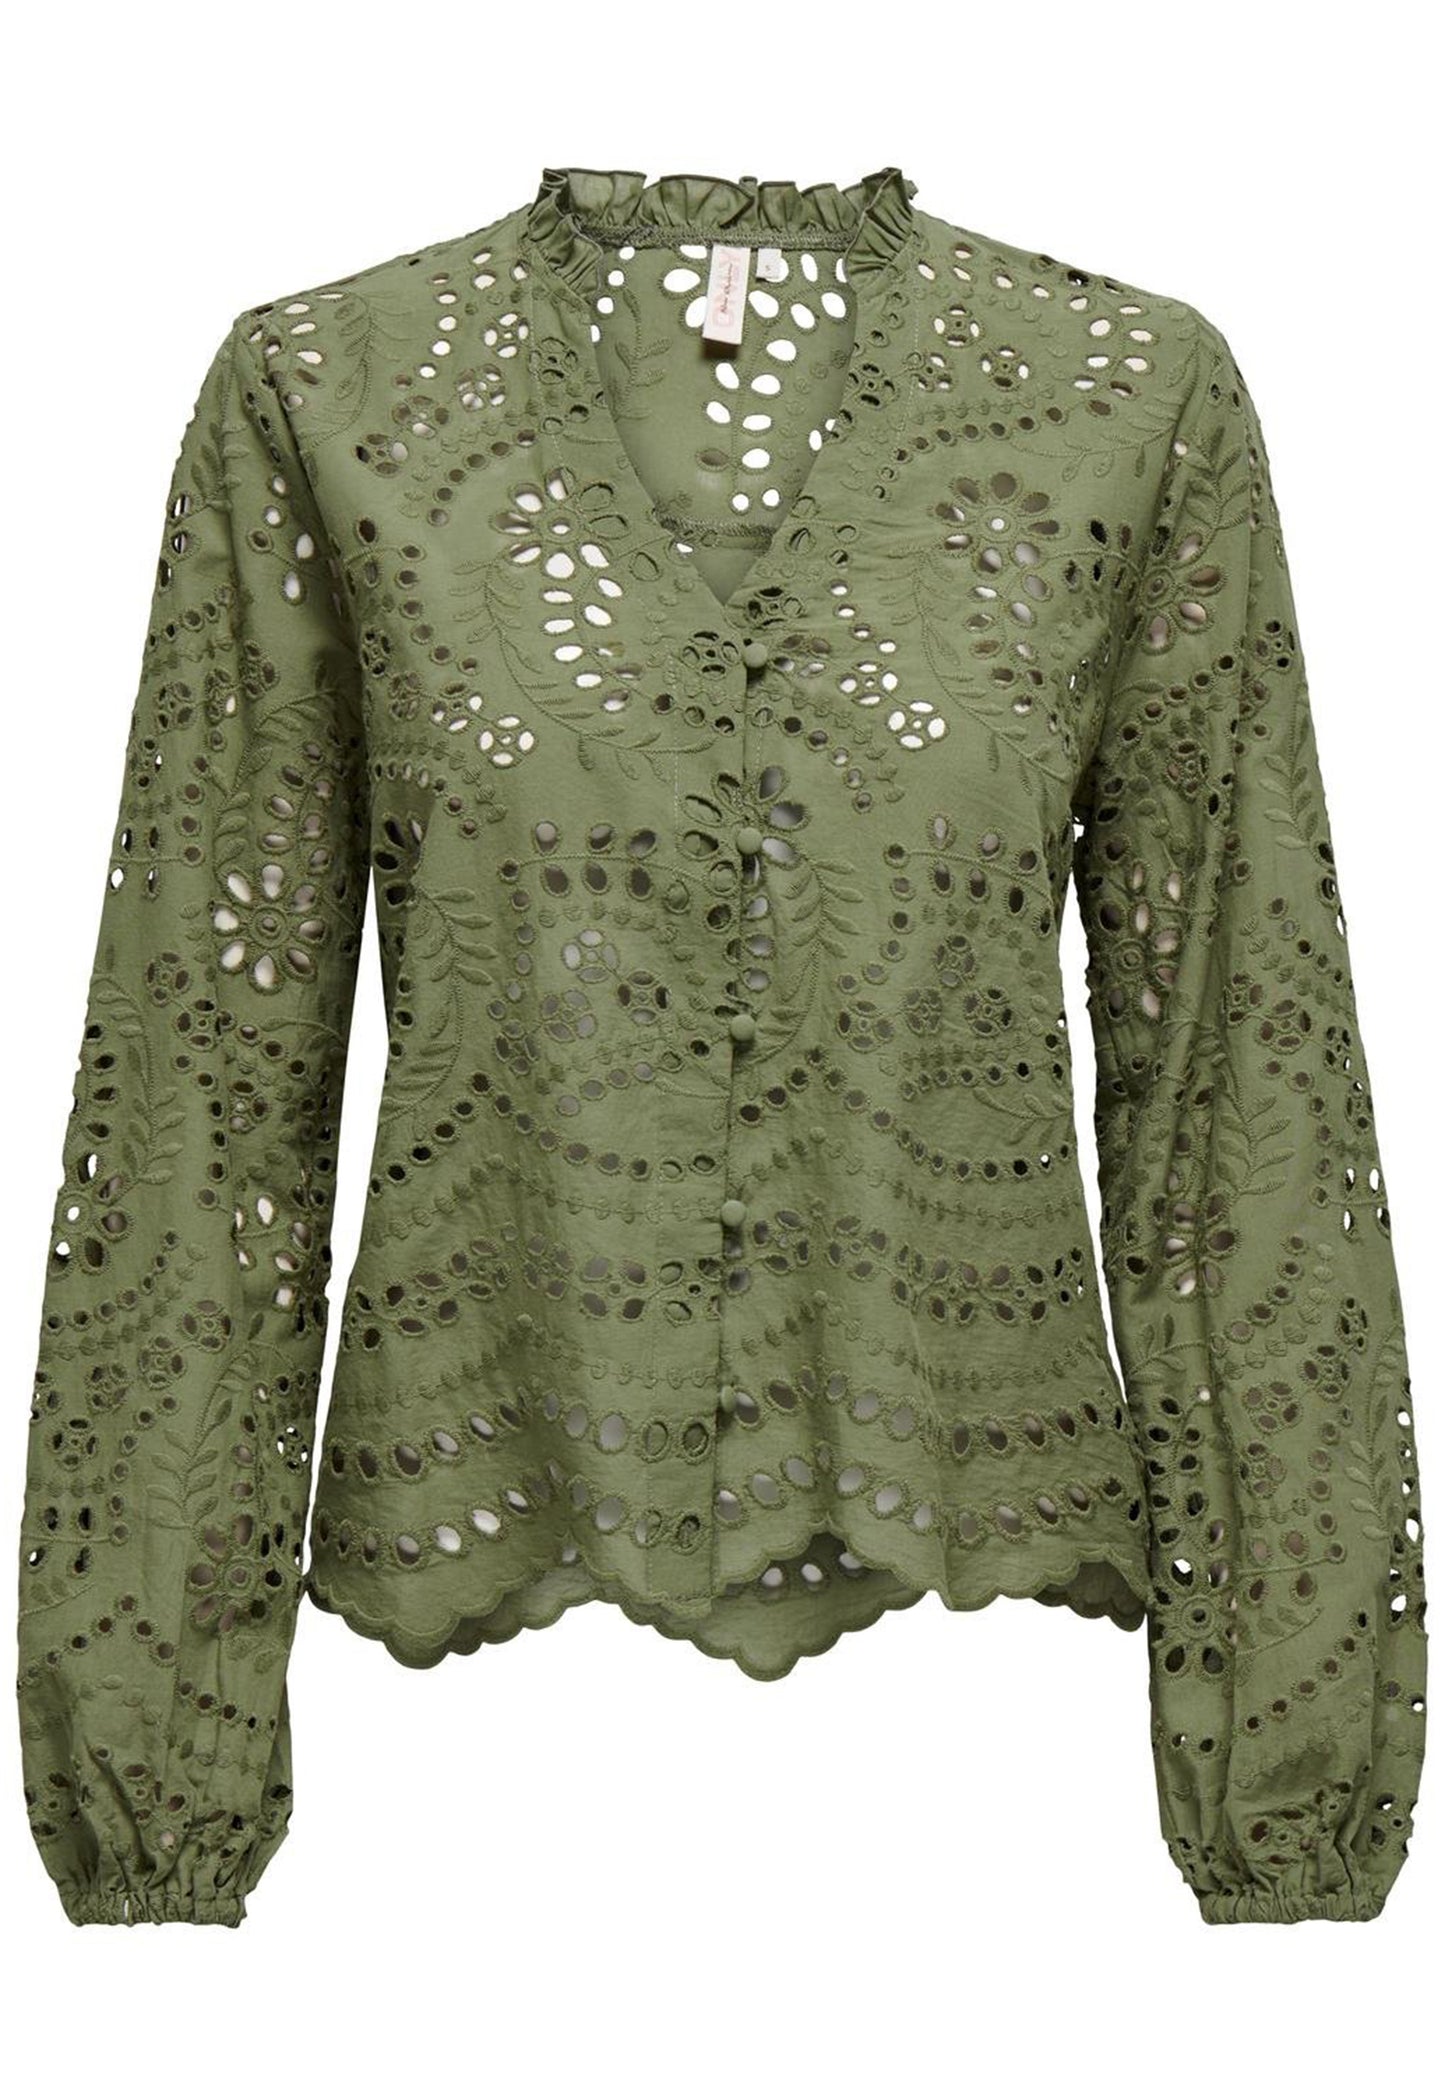 
                  
                    SOLAMENTE Blusa de manga larga de encaje con bordado inglés Lalisa en verde oliva - One Nation Clothing
                  
                